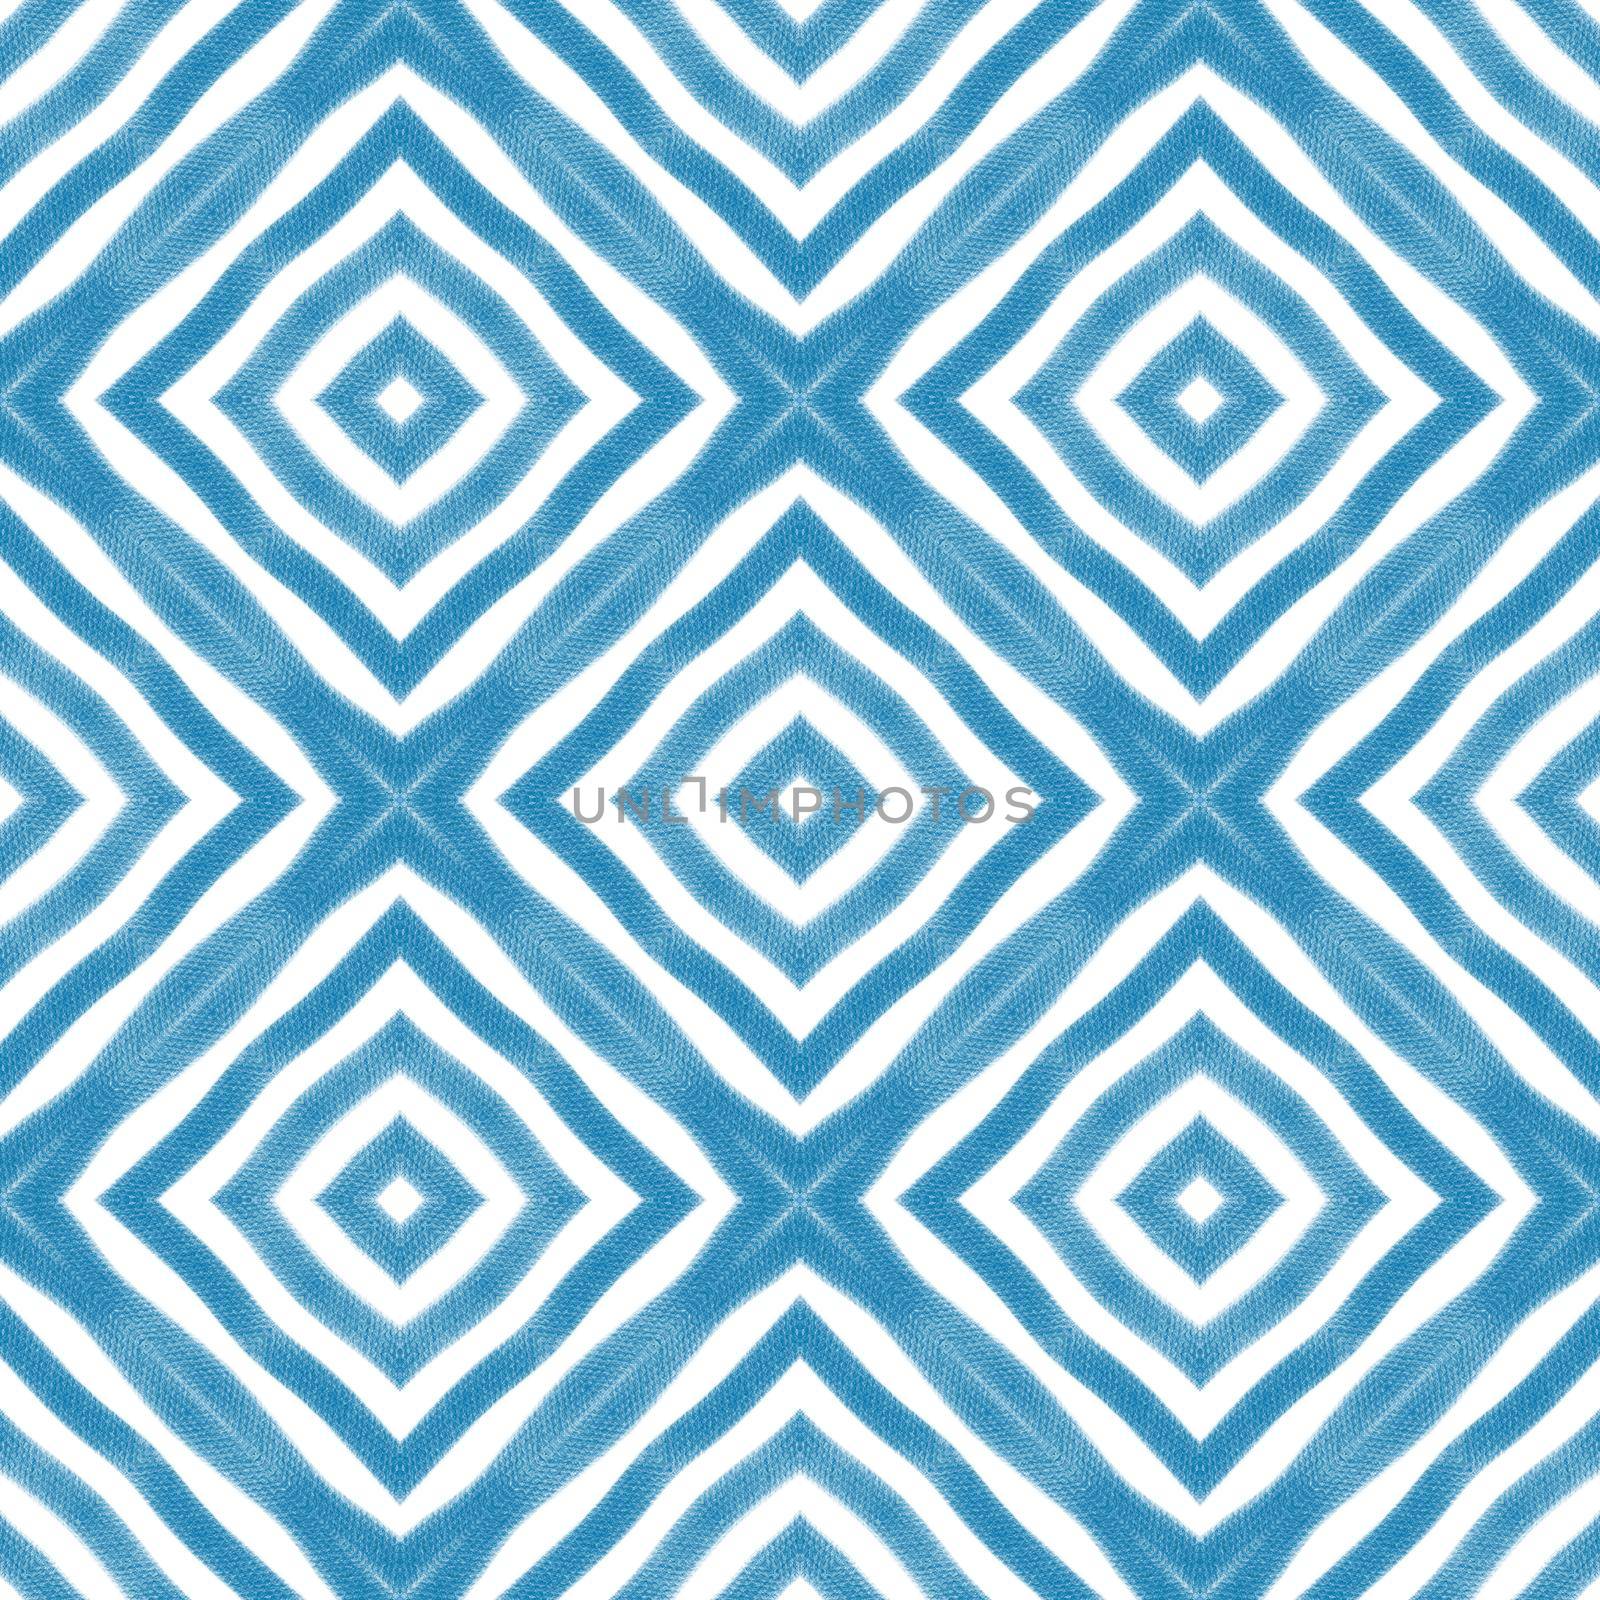 Arabesque hand drawn pattern. Blue symmetrical by beginagain